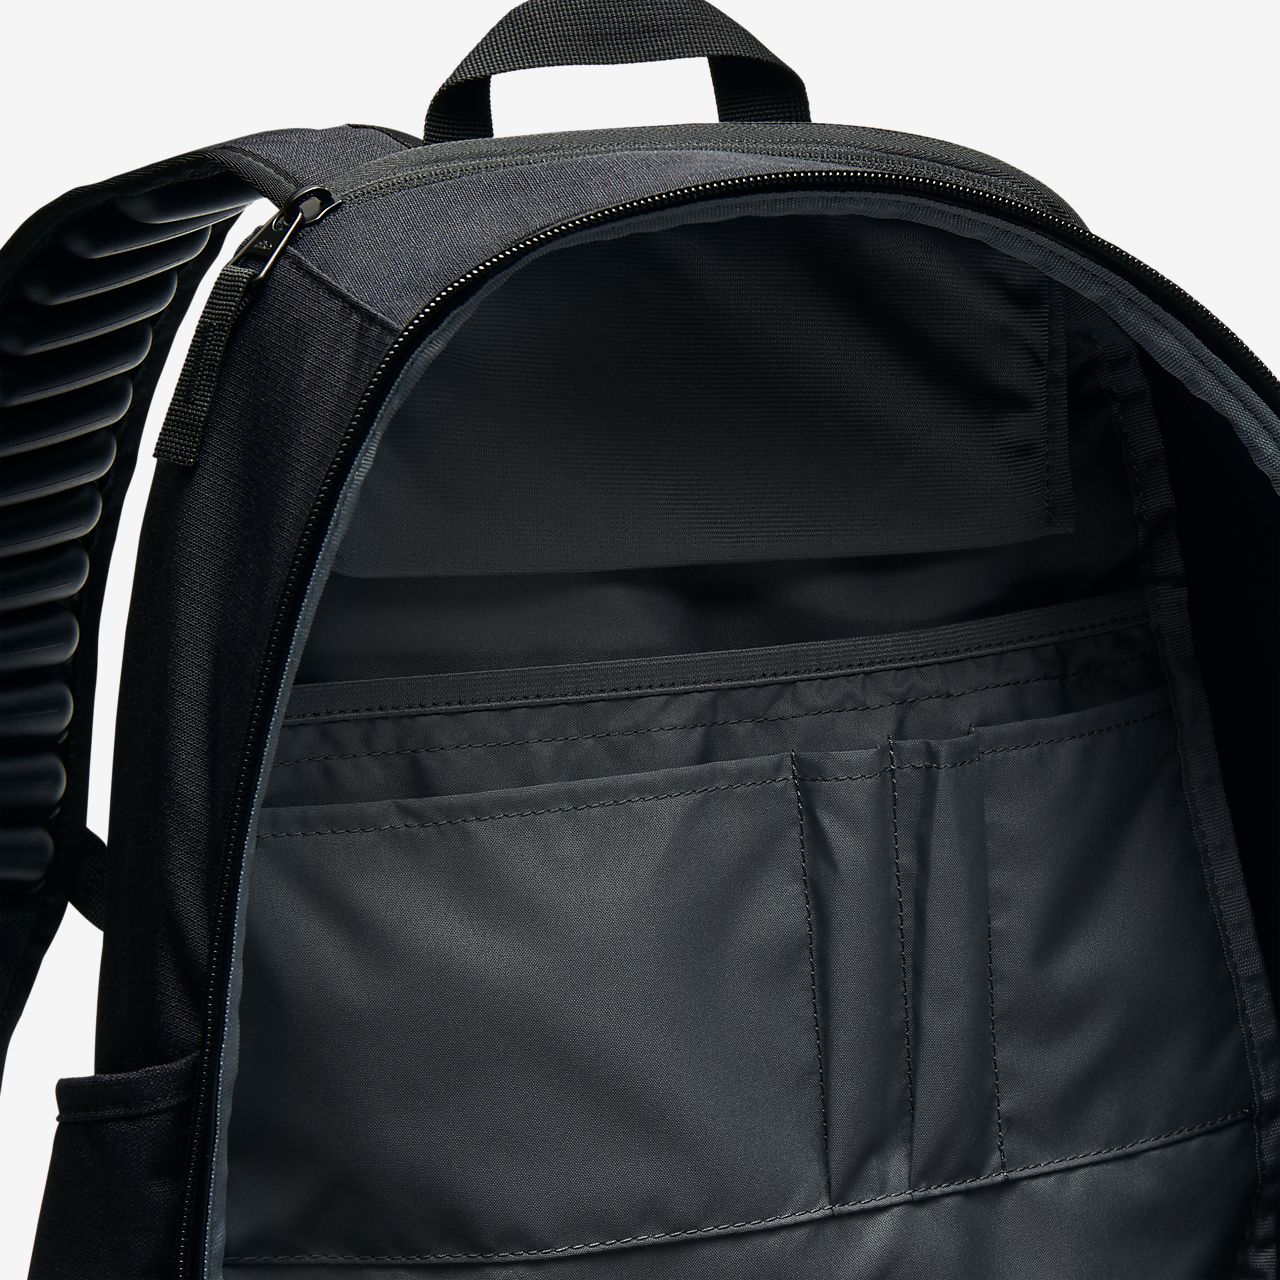 nike vapor backpack black